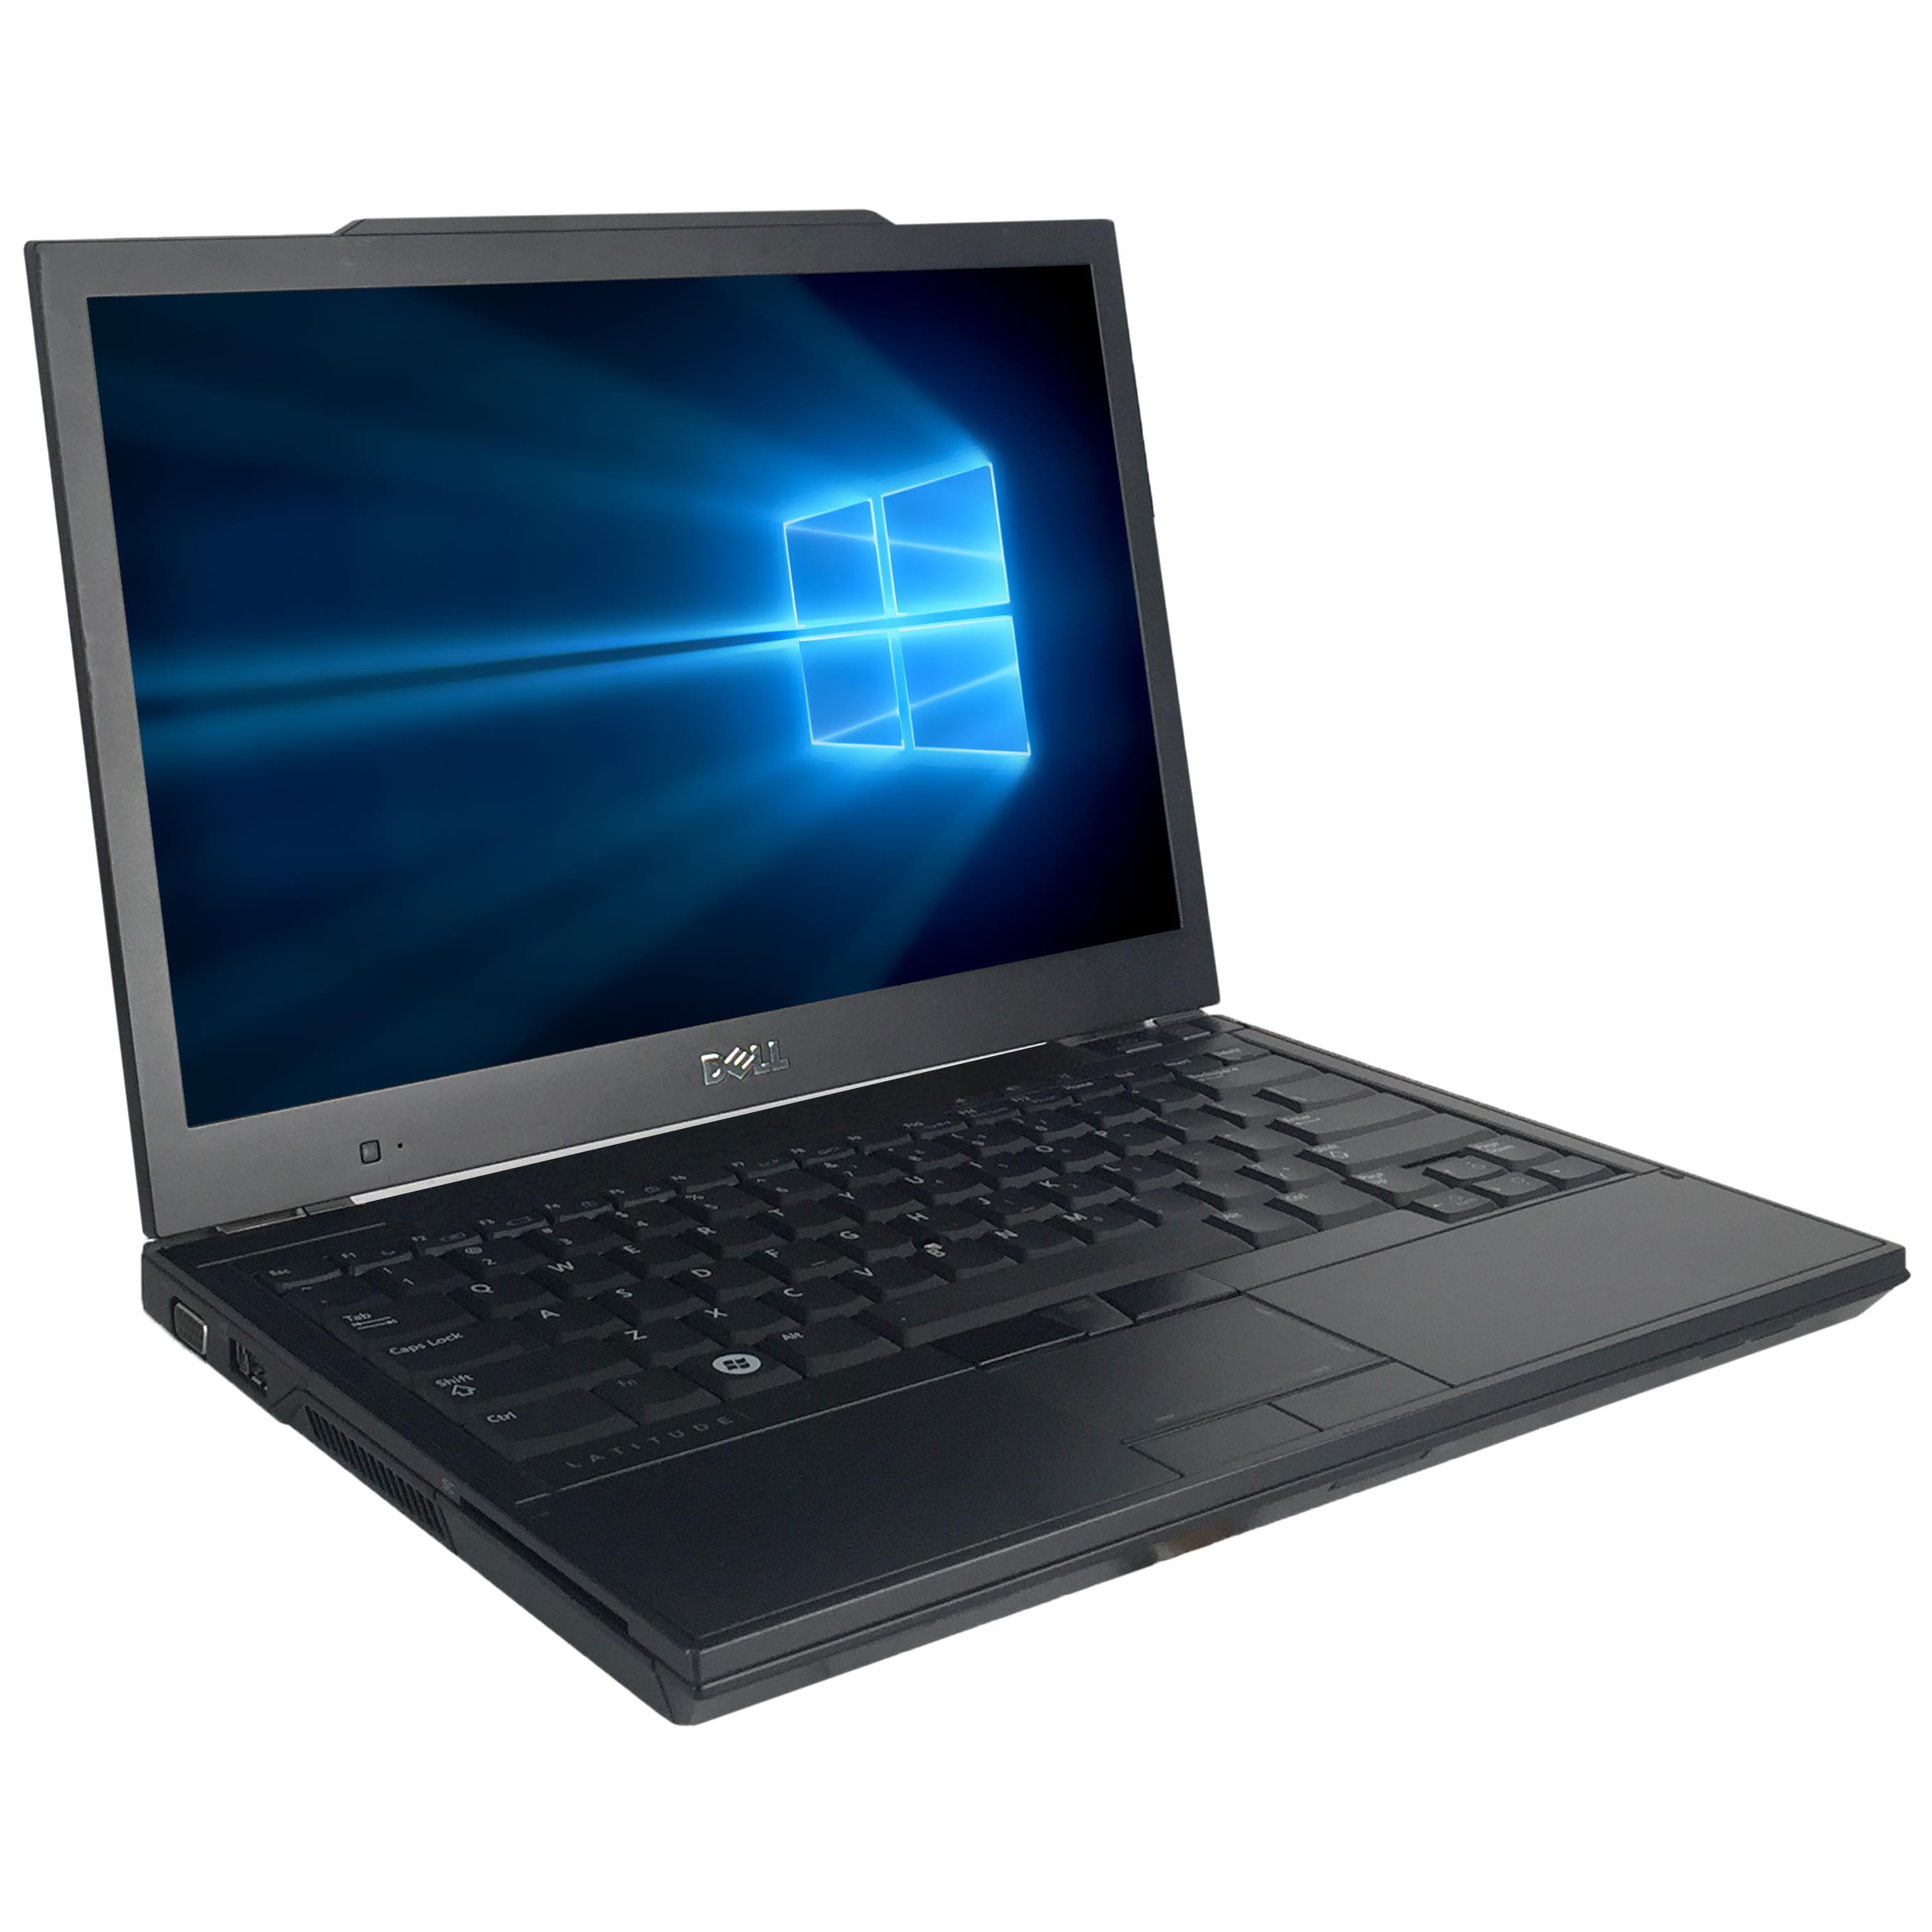 Dell Latitude E4300 13.3" TFT Laptop Intel C2D 2.26GHZ 4G RAM 60G SSD